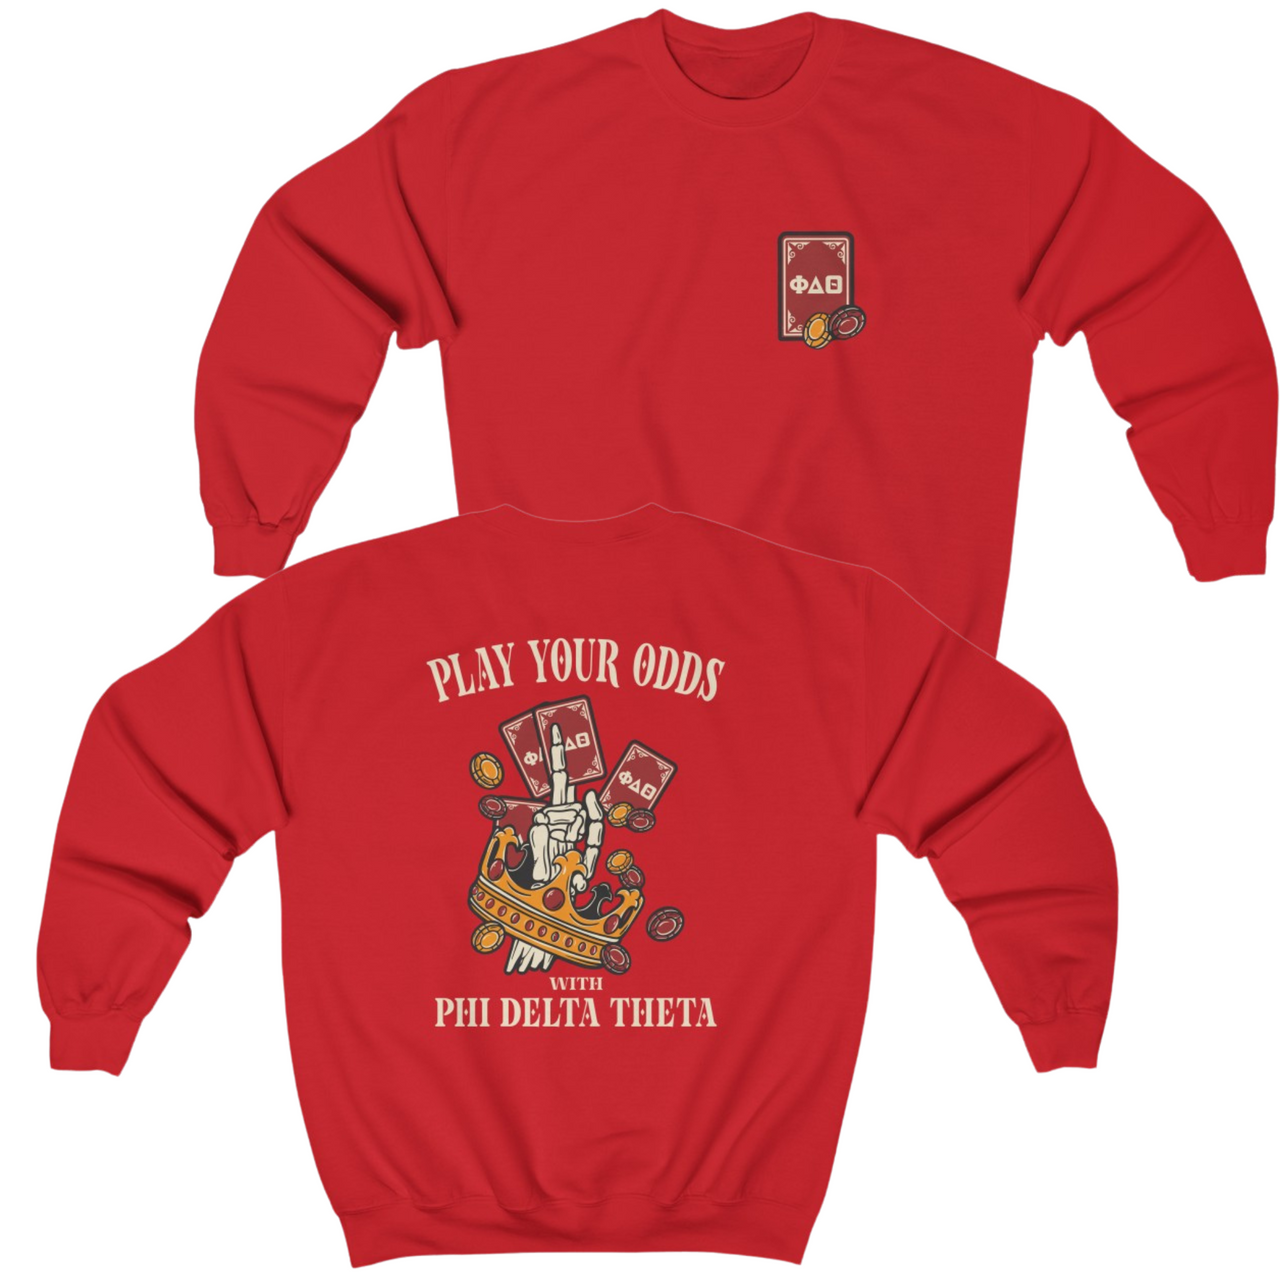 Red Phi Delta Theta Graphic Crewneck Sweatshirt | Play Your Odds | phi delta theta fraternity greek apparel